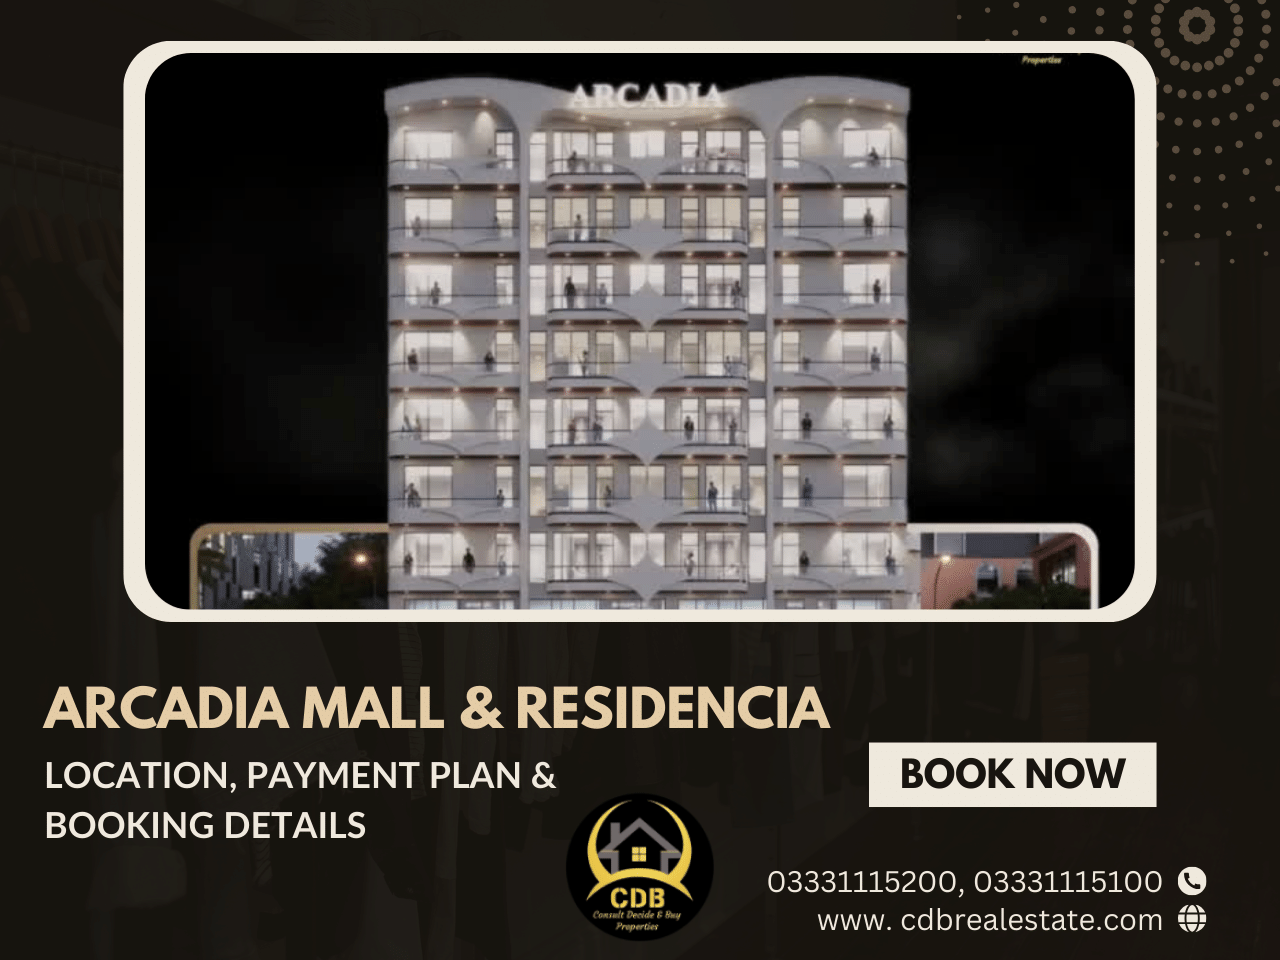 Arcadia Mall & Residencia